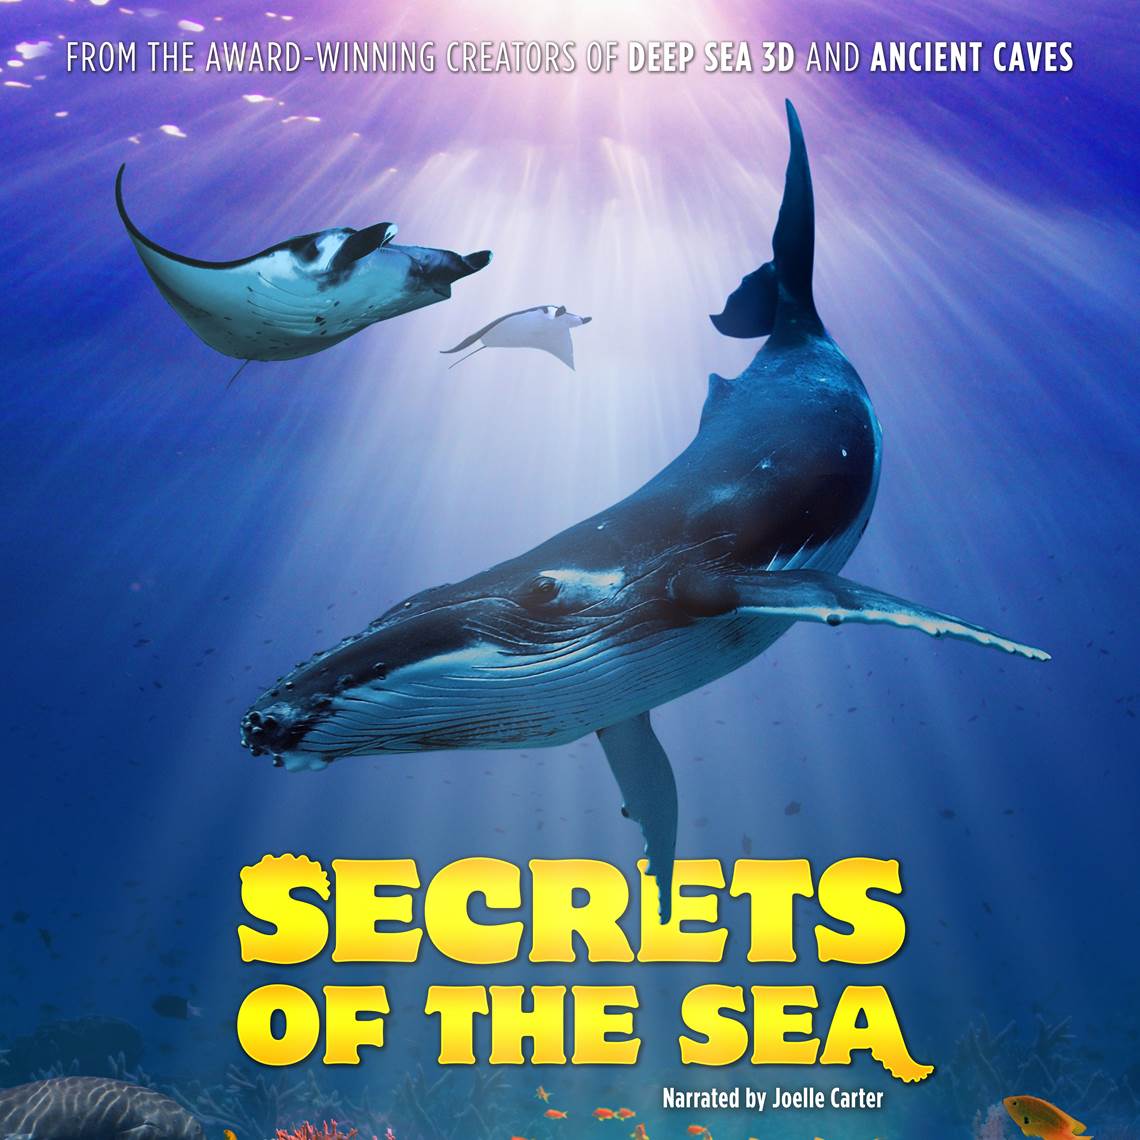 Secrets of the sea